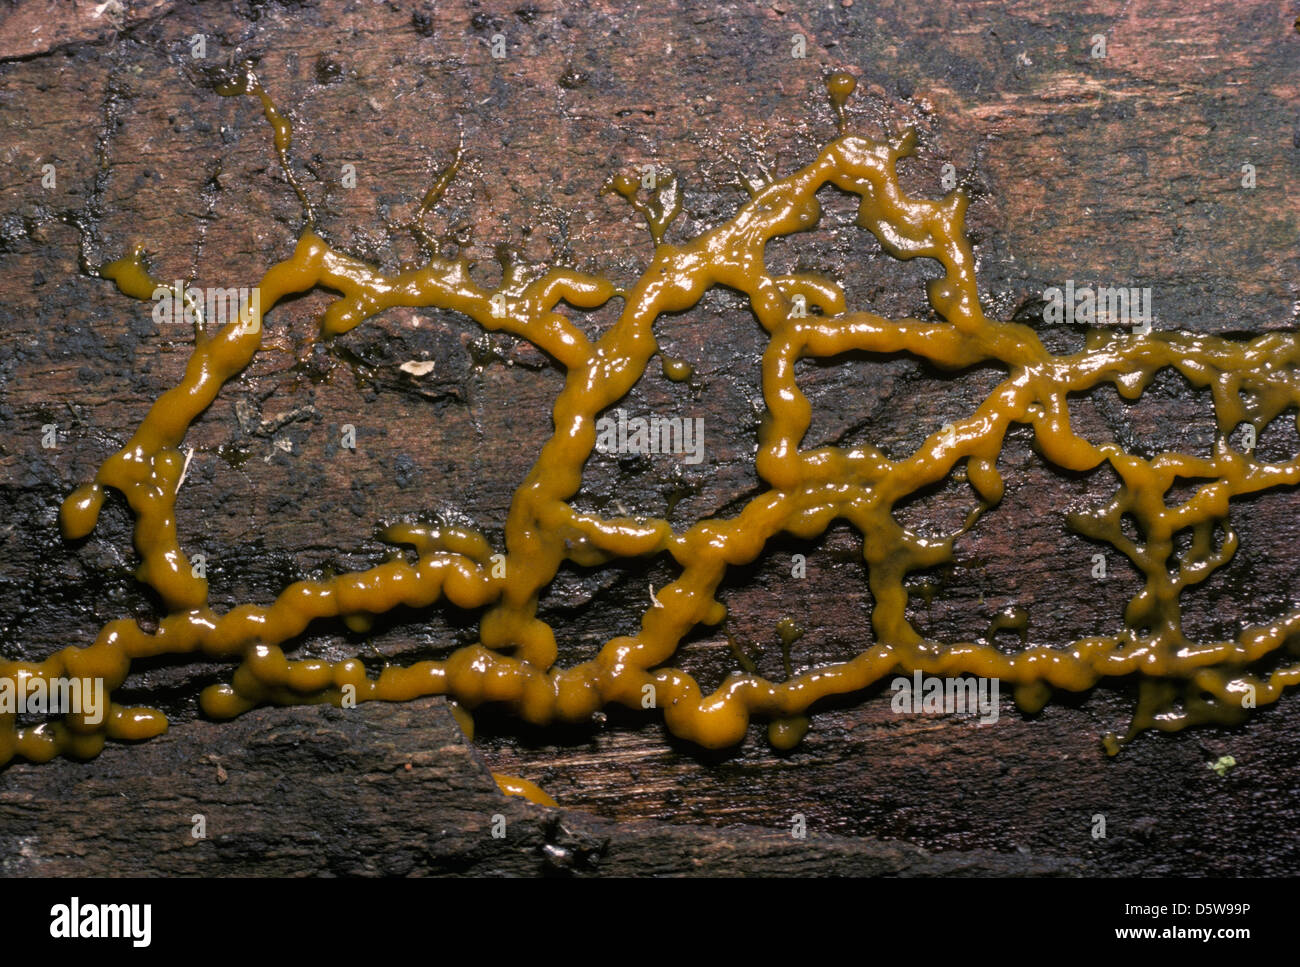 Badhamia sp. Myxomycete or slime mould plasmodium developing on a log, UK Stock Photo